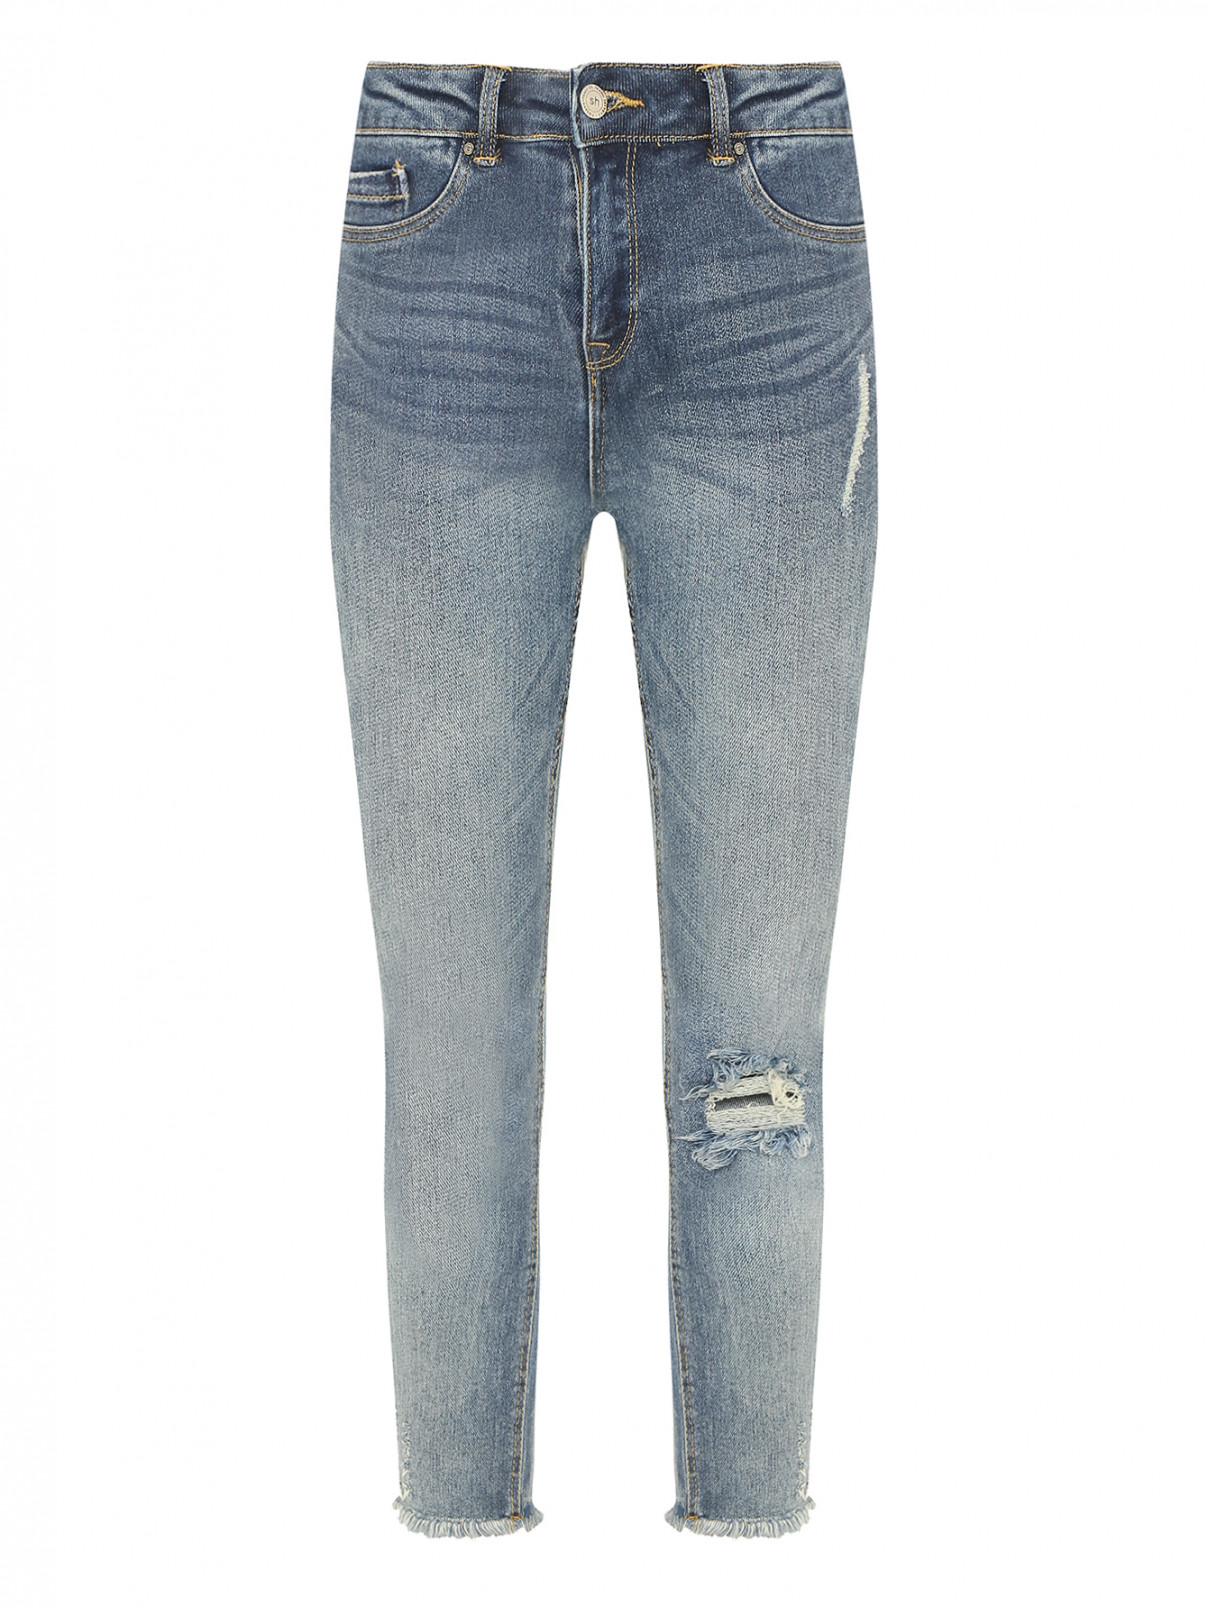 Зауженные джинсы с бахромой SILVIAN HEACH  –  Общий вид  – Цвет:  Синий